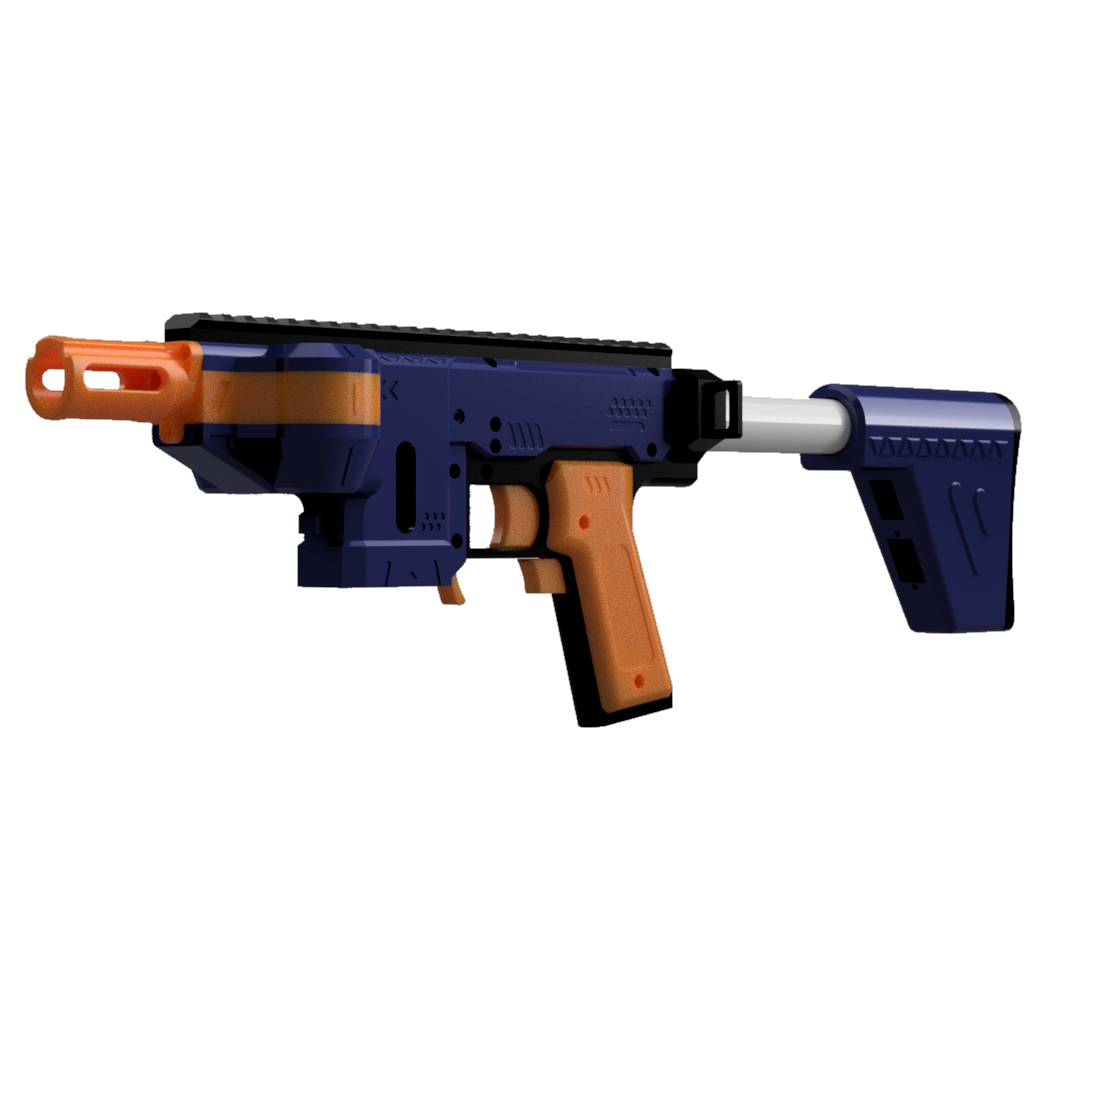 3D Printed -- Nerf Ring and Pin Sight (Set) for Nerf Dart Gun Blaster